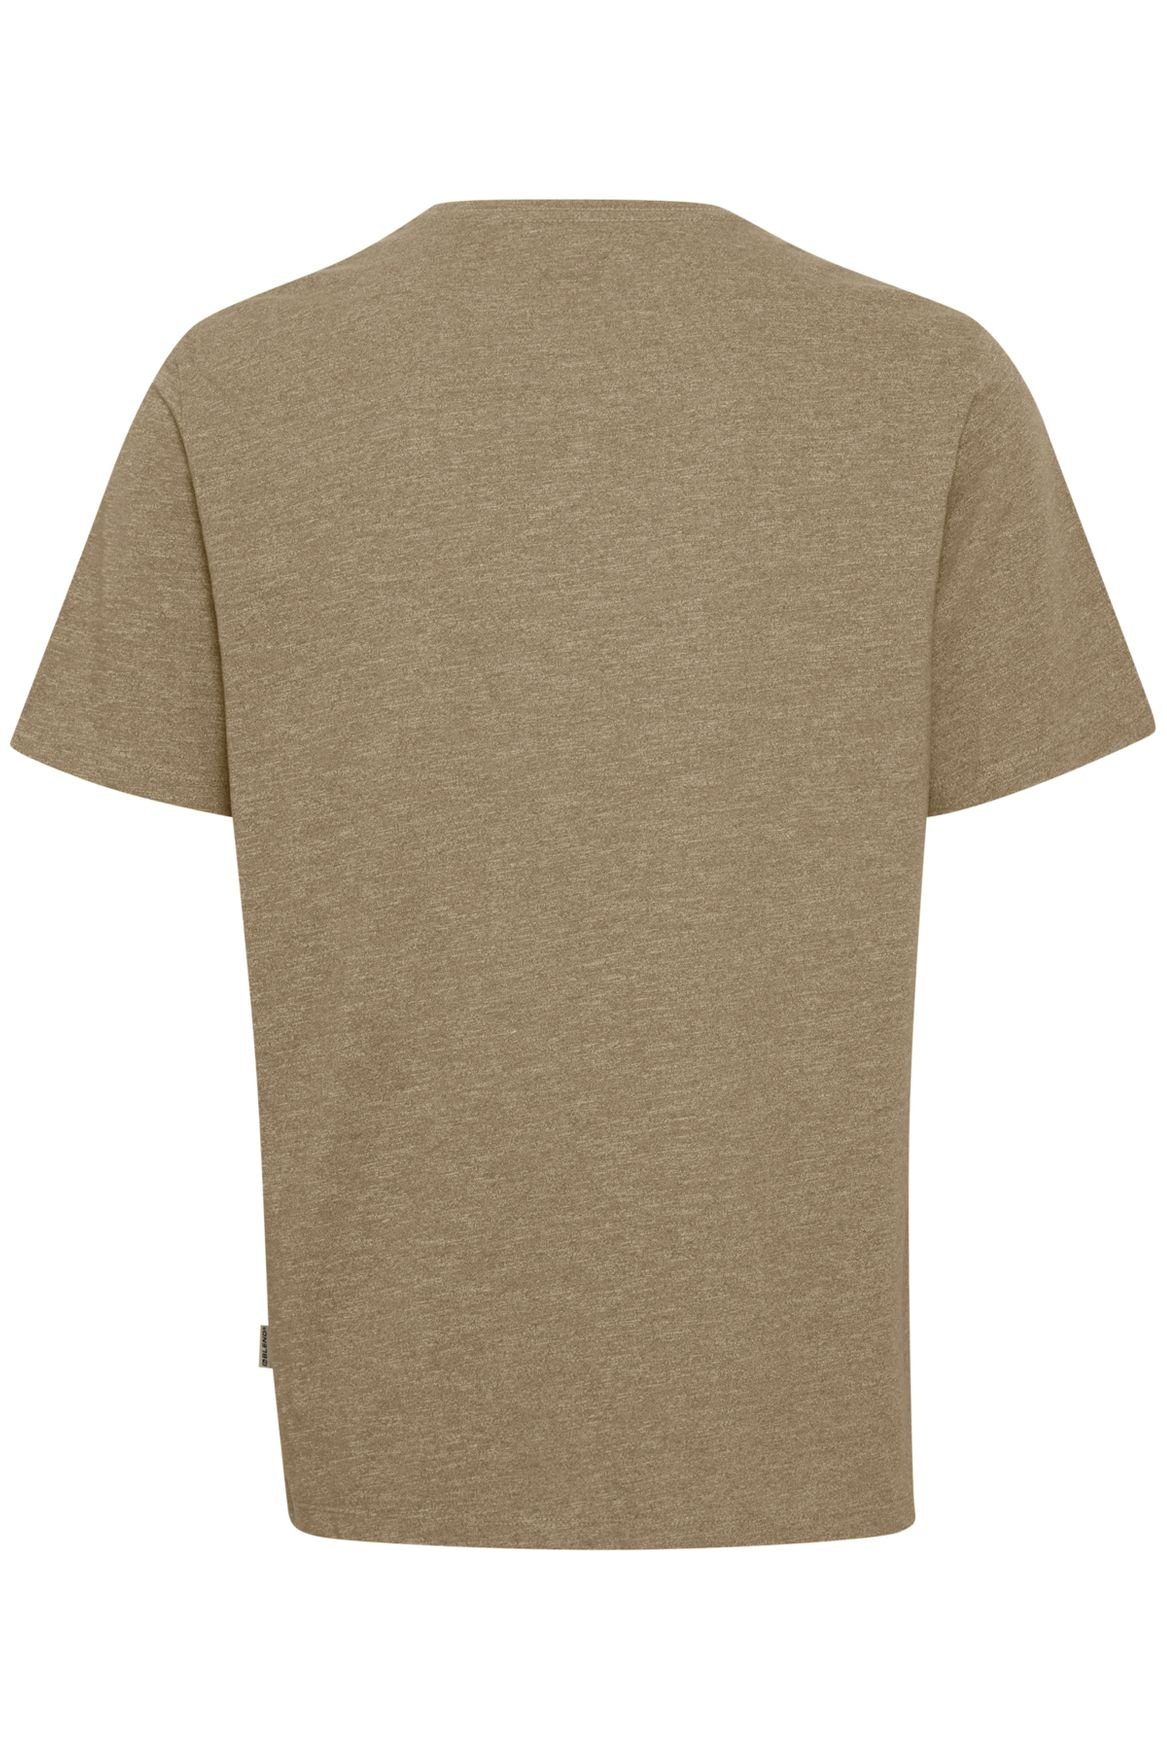 5030 Beige T-Shirt BHWilton T-Shirt Kurzarm Blend Rundhals Shirt in Stretch